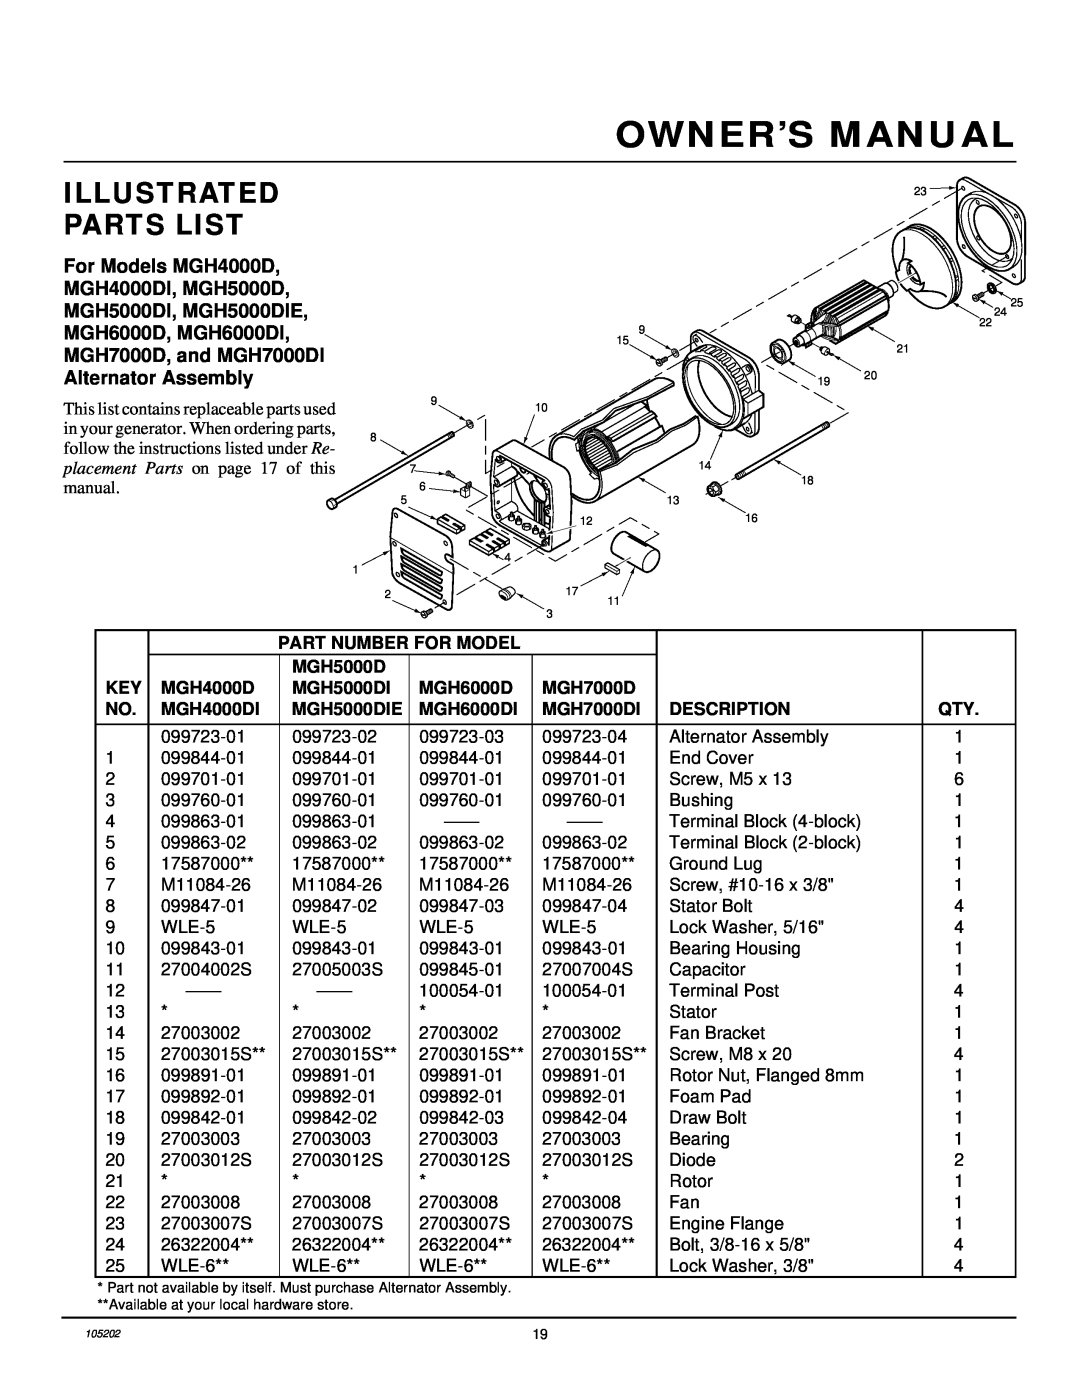 Master Lock installation manual For Models MGH4000D MGH4000DI, MGH5000D MGH5000DI, MGH5000DIE, Illustrated Parts List 